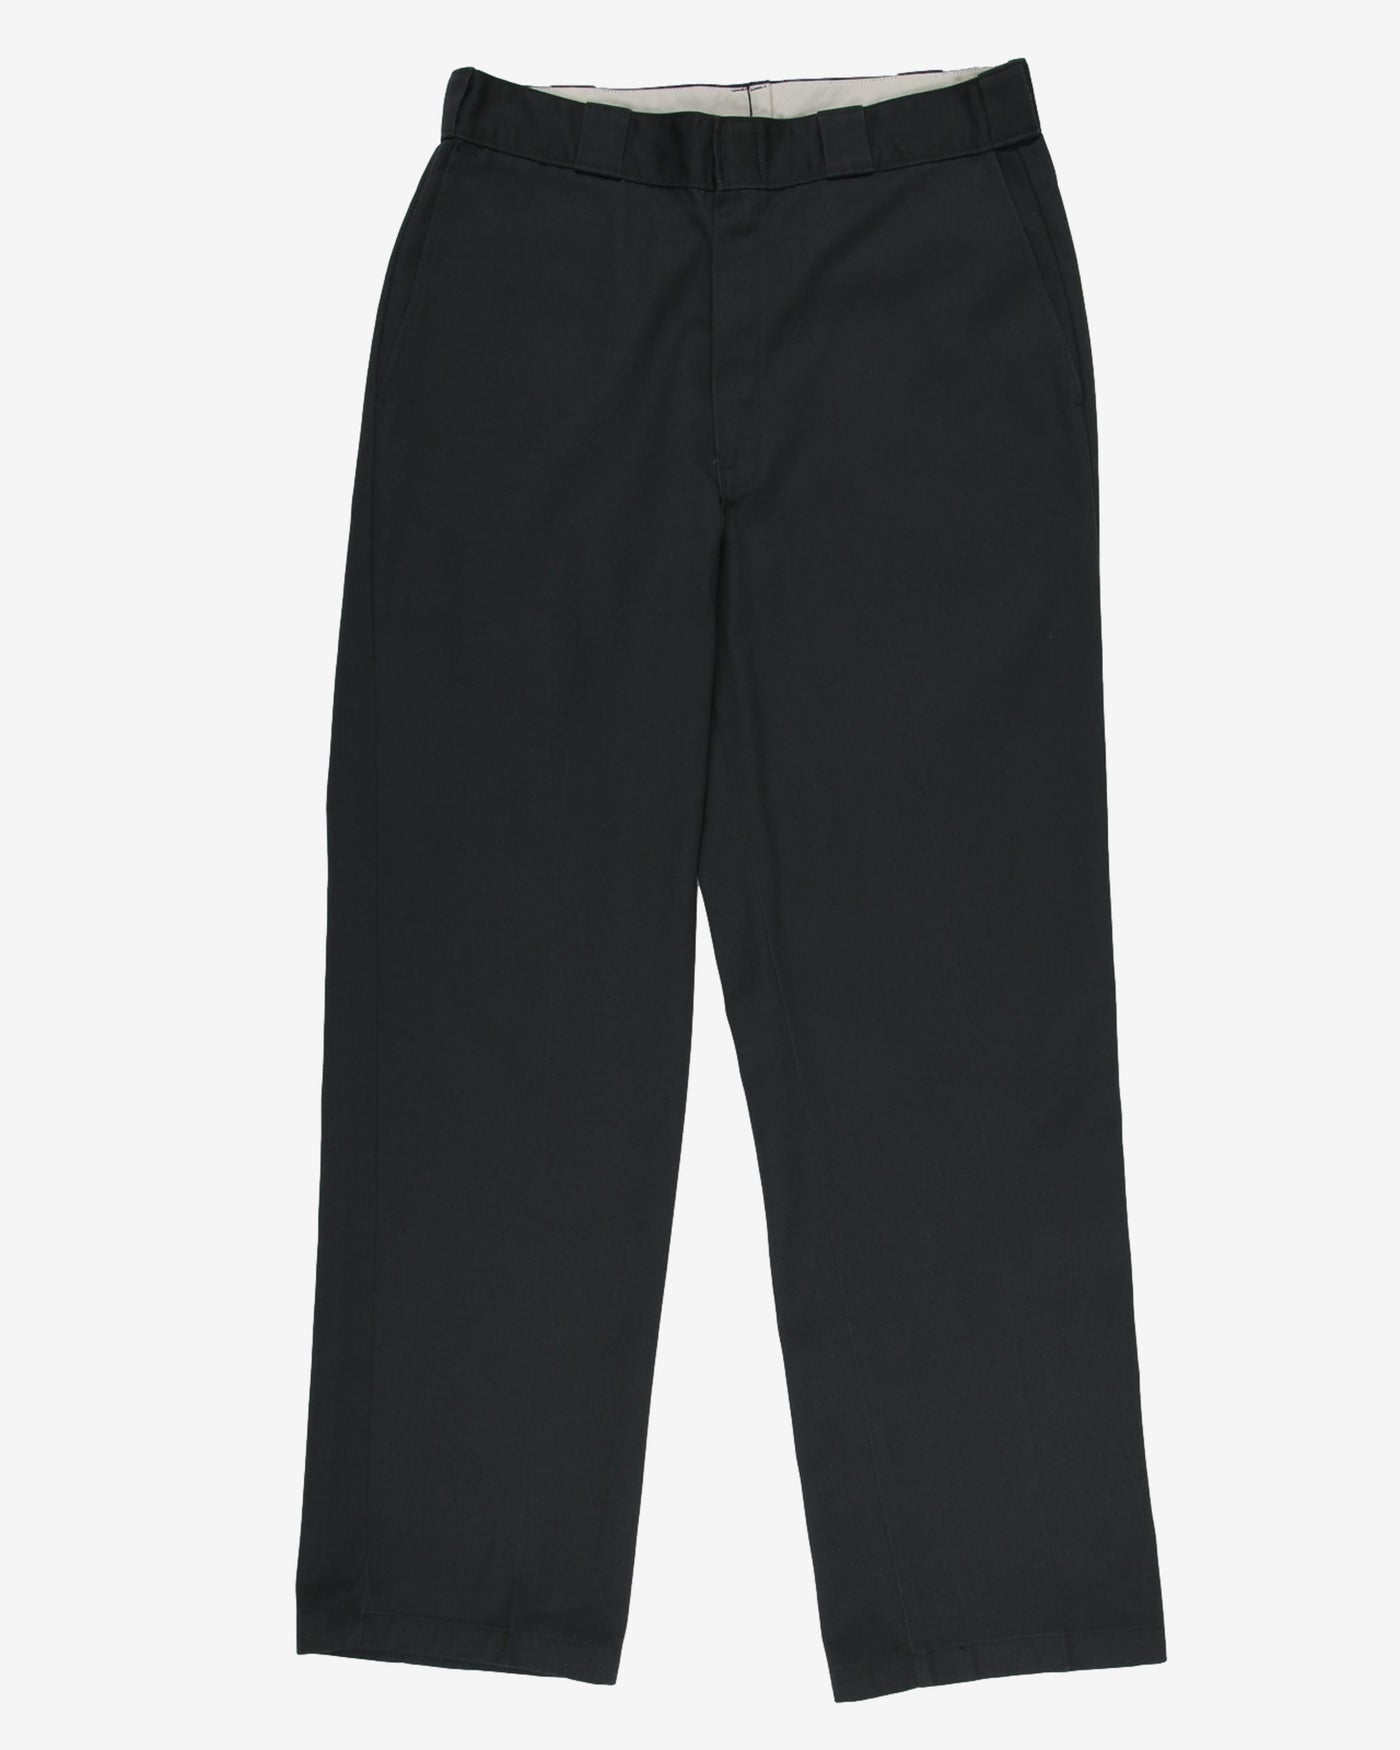 Dickies Vintage Made in Mexico Dark Grey Work Pant Trousers - W33 L31